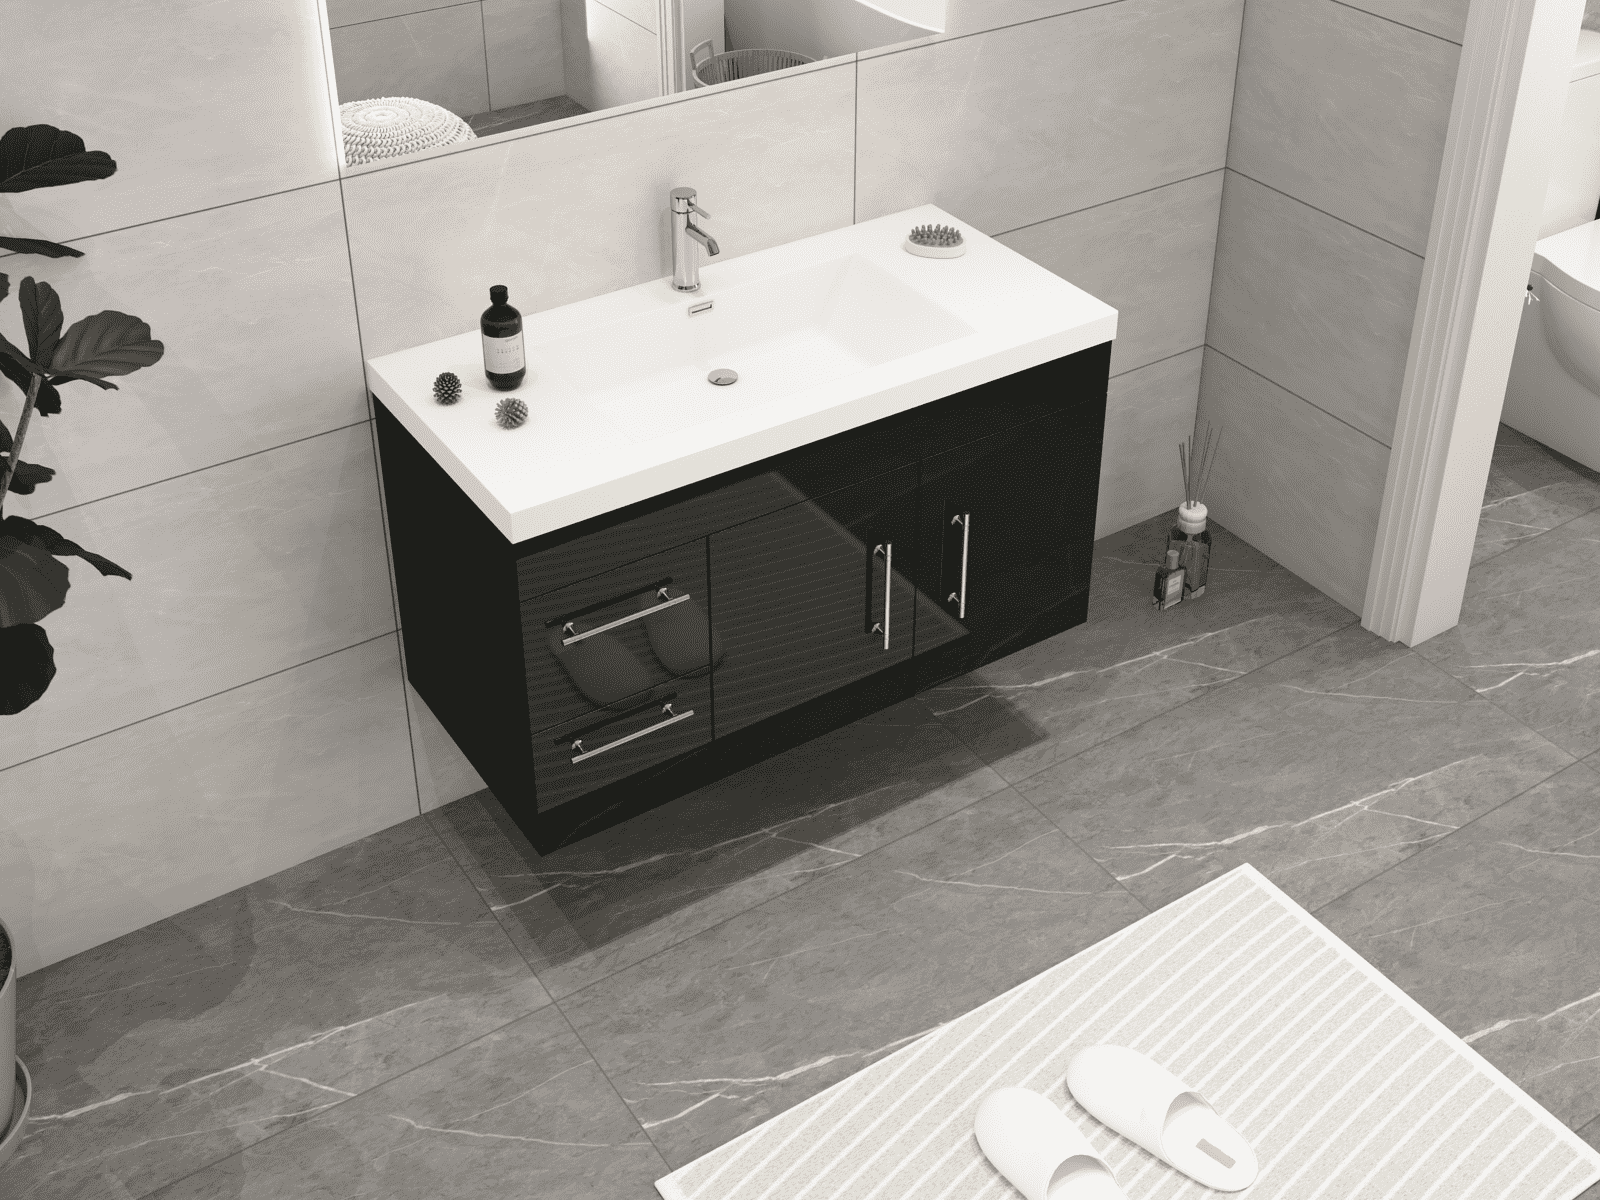 Elsa 42" Wall-Mounted Floating Bathroom Vanity with Reinforced Acrylic Sink in Gloss Black | Better Vanity